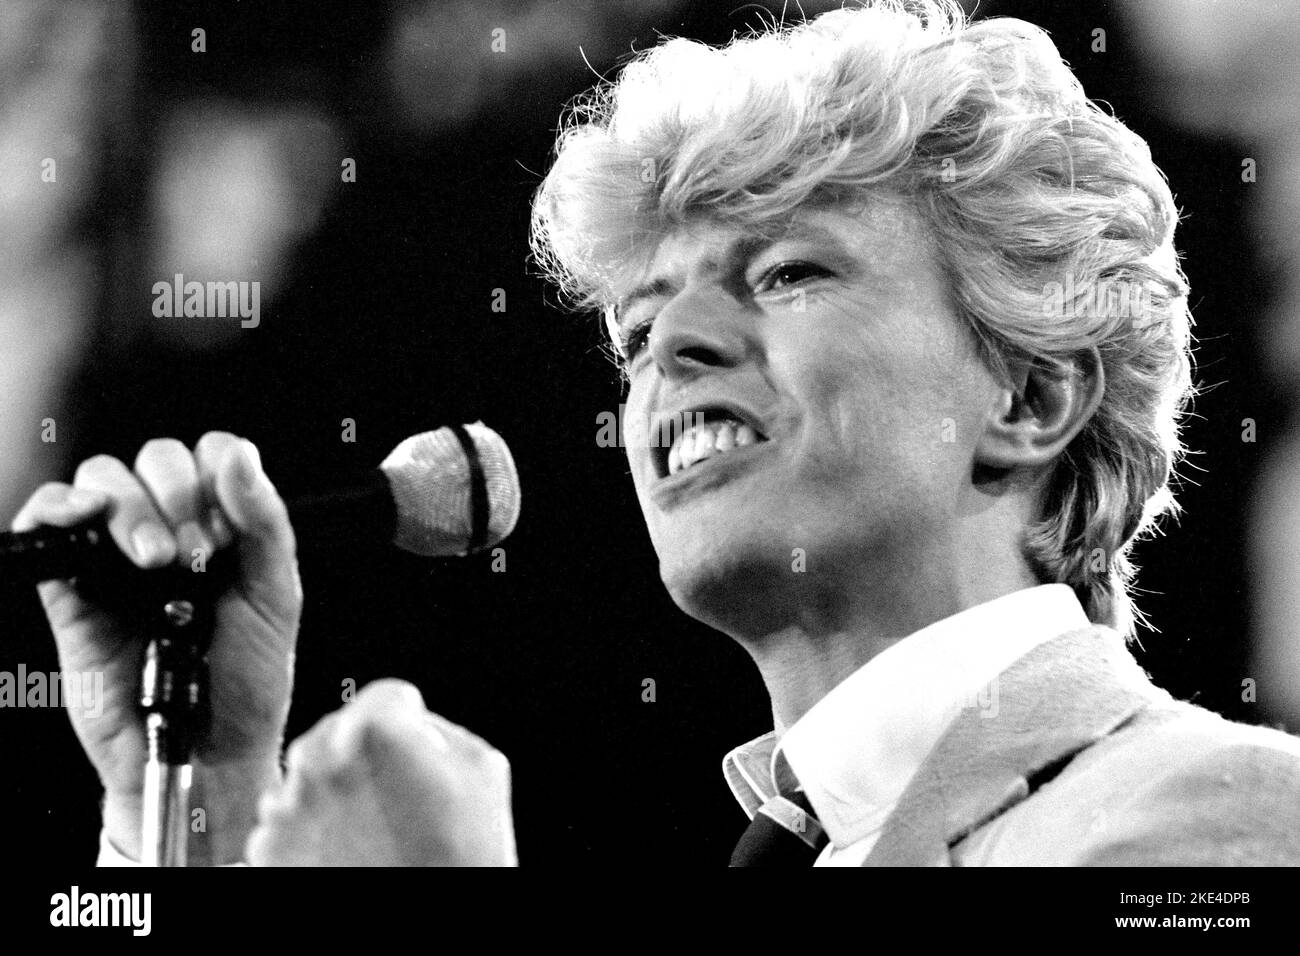 David Bowie in het Feijenoord stadion 1983. Rotterdam-Paesi Bassi. Serious Moonlight Tour. Live sul palco David Bowie.-vvbvanbree. Foto Stock